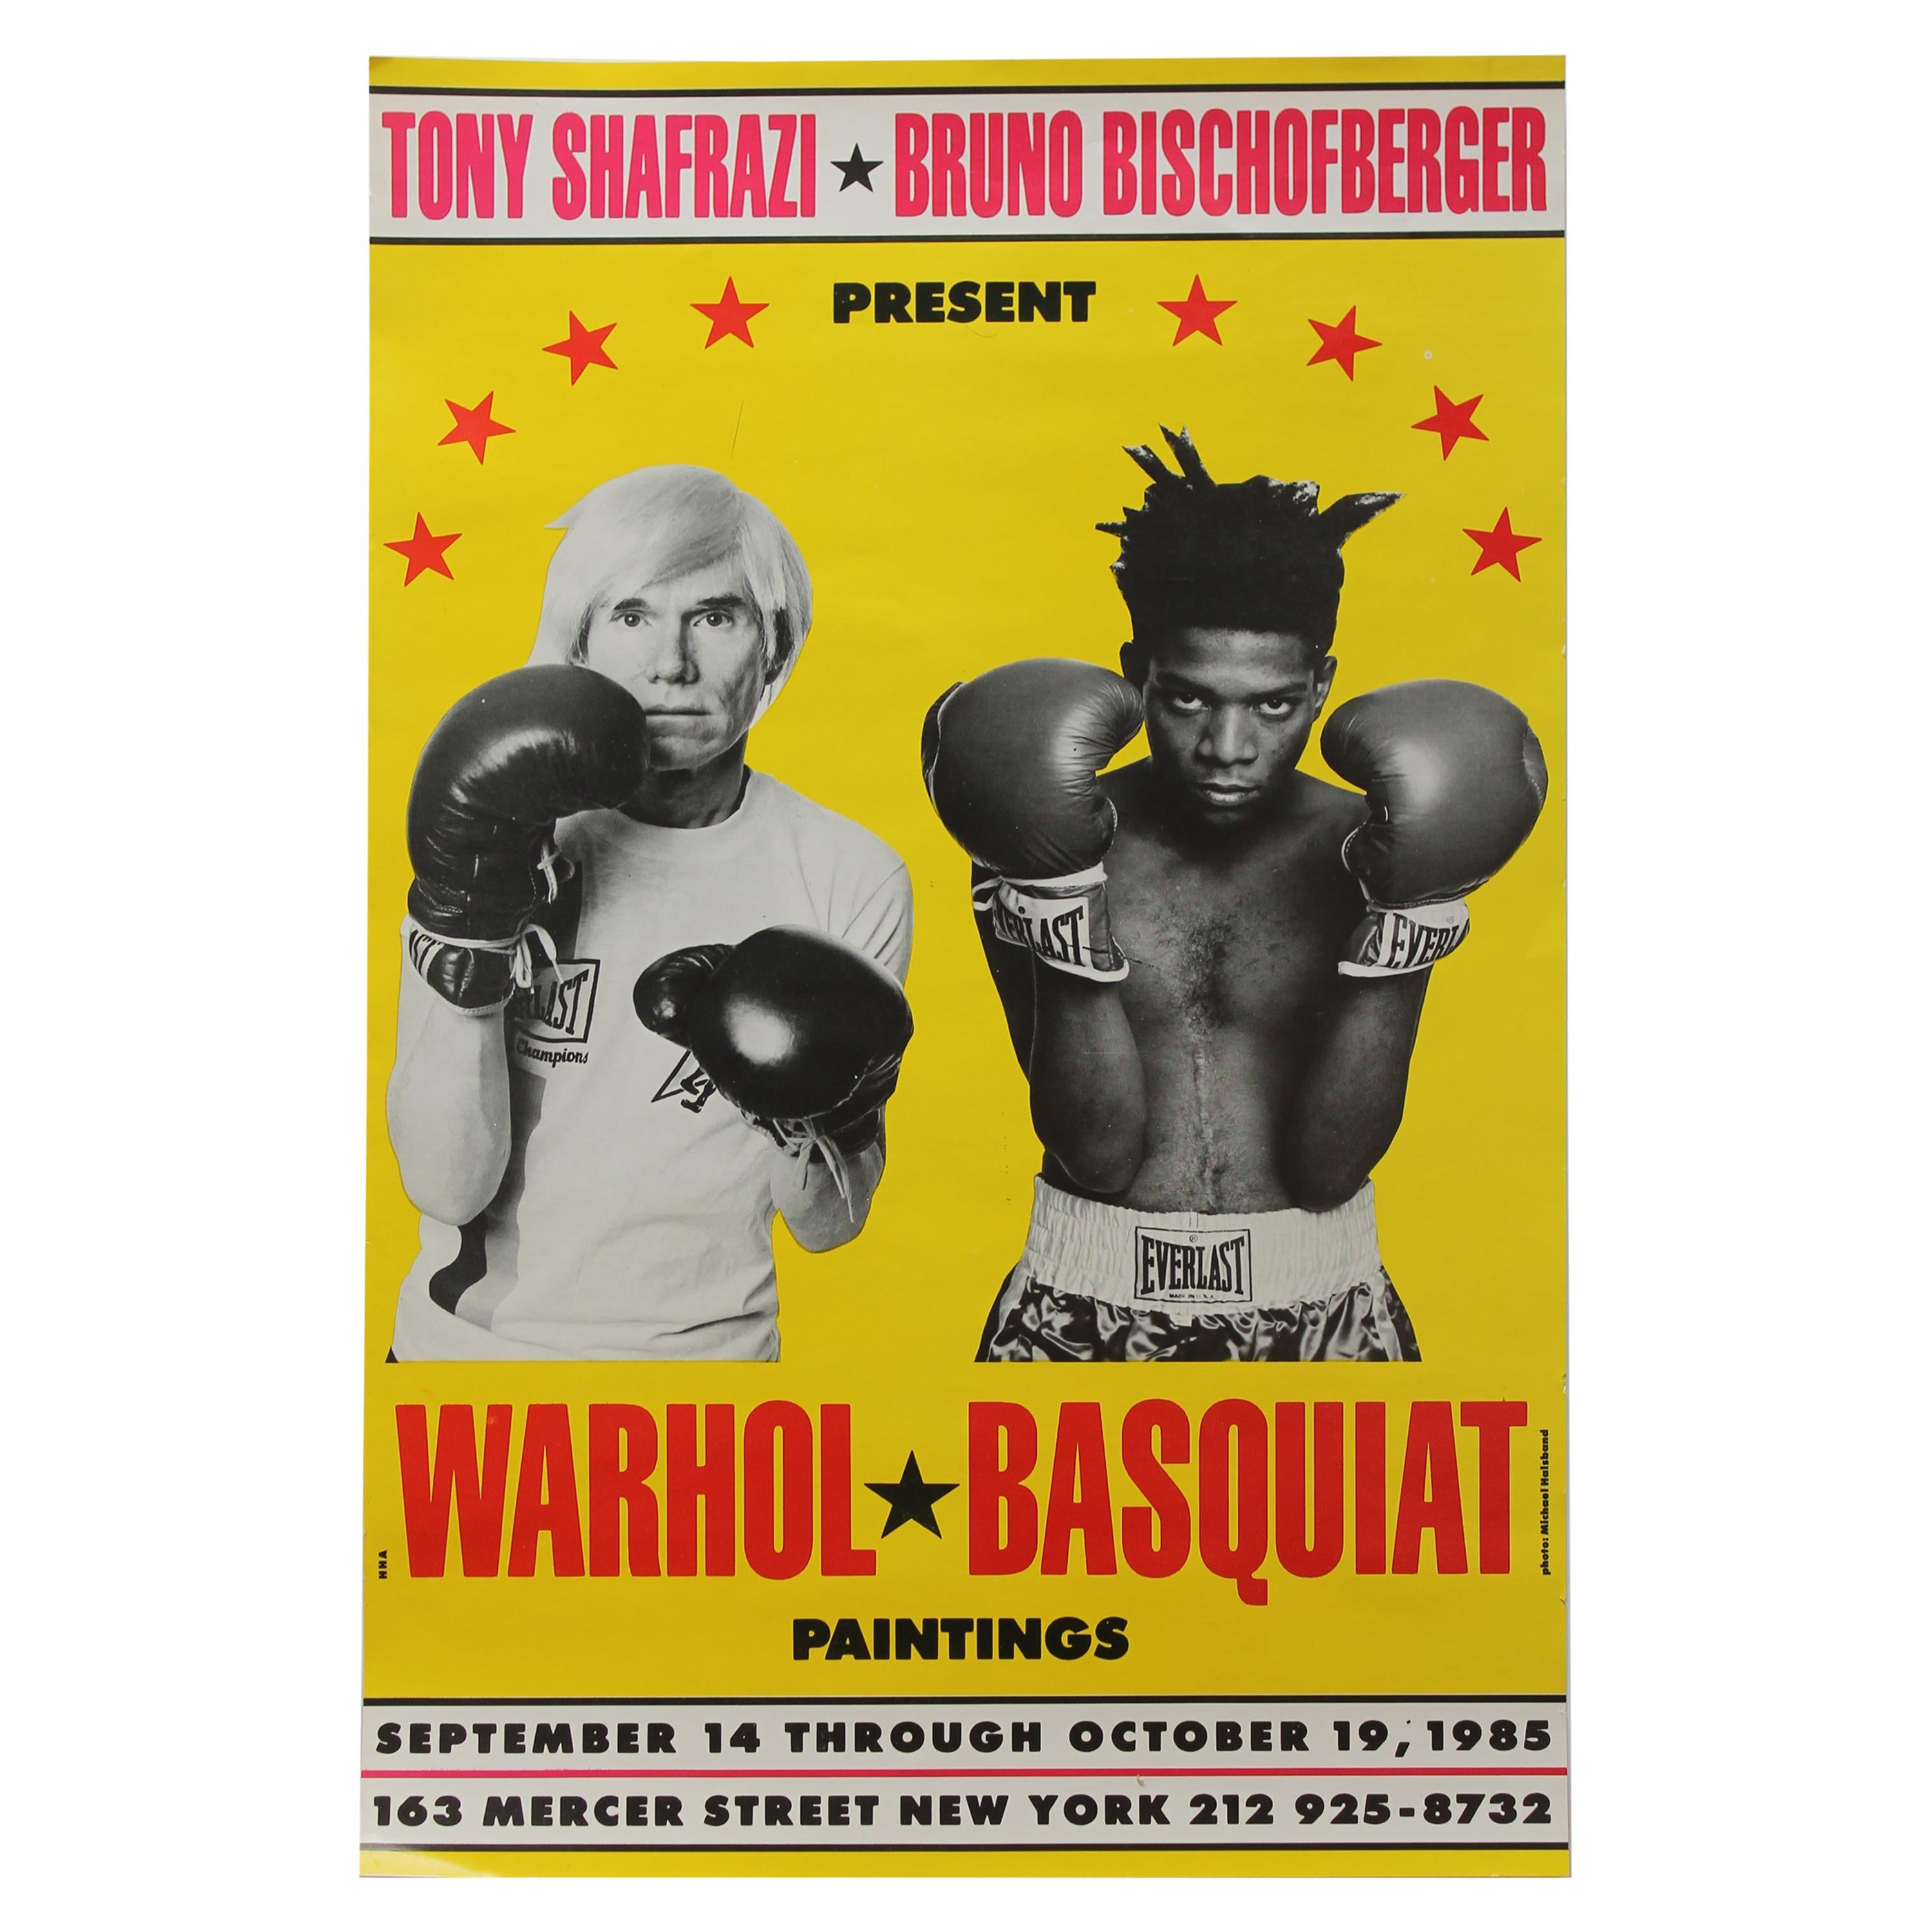 Original Poster for Warhol + Basquiat Paintings